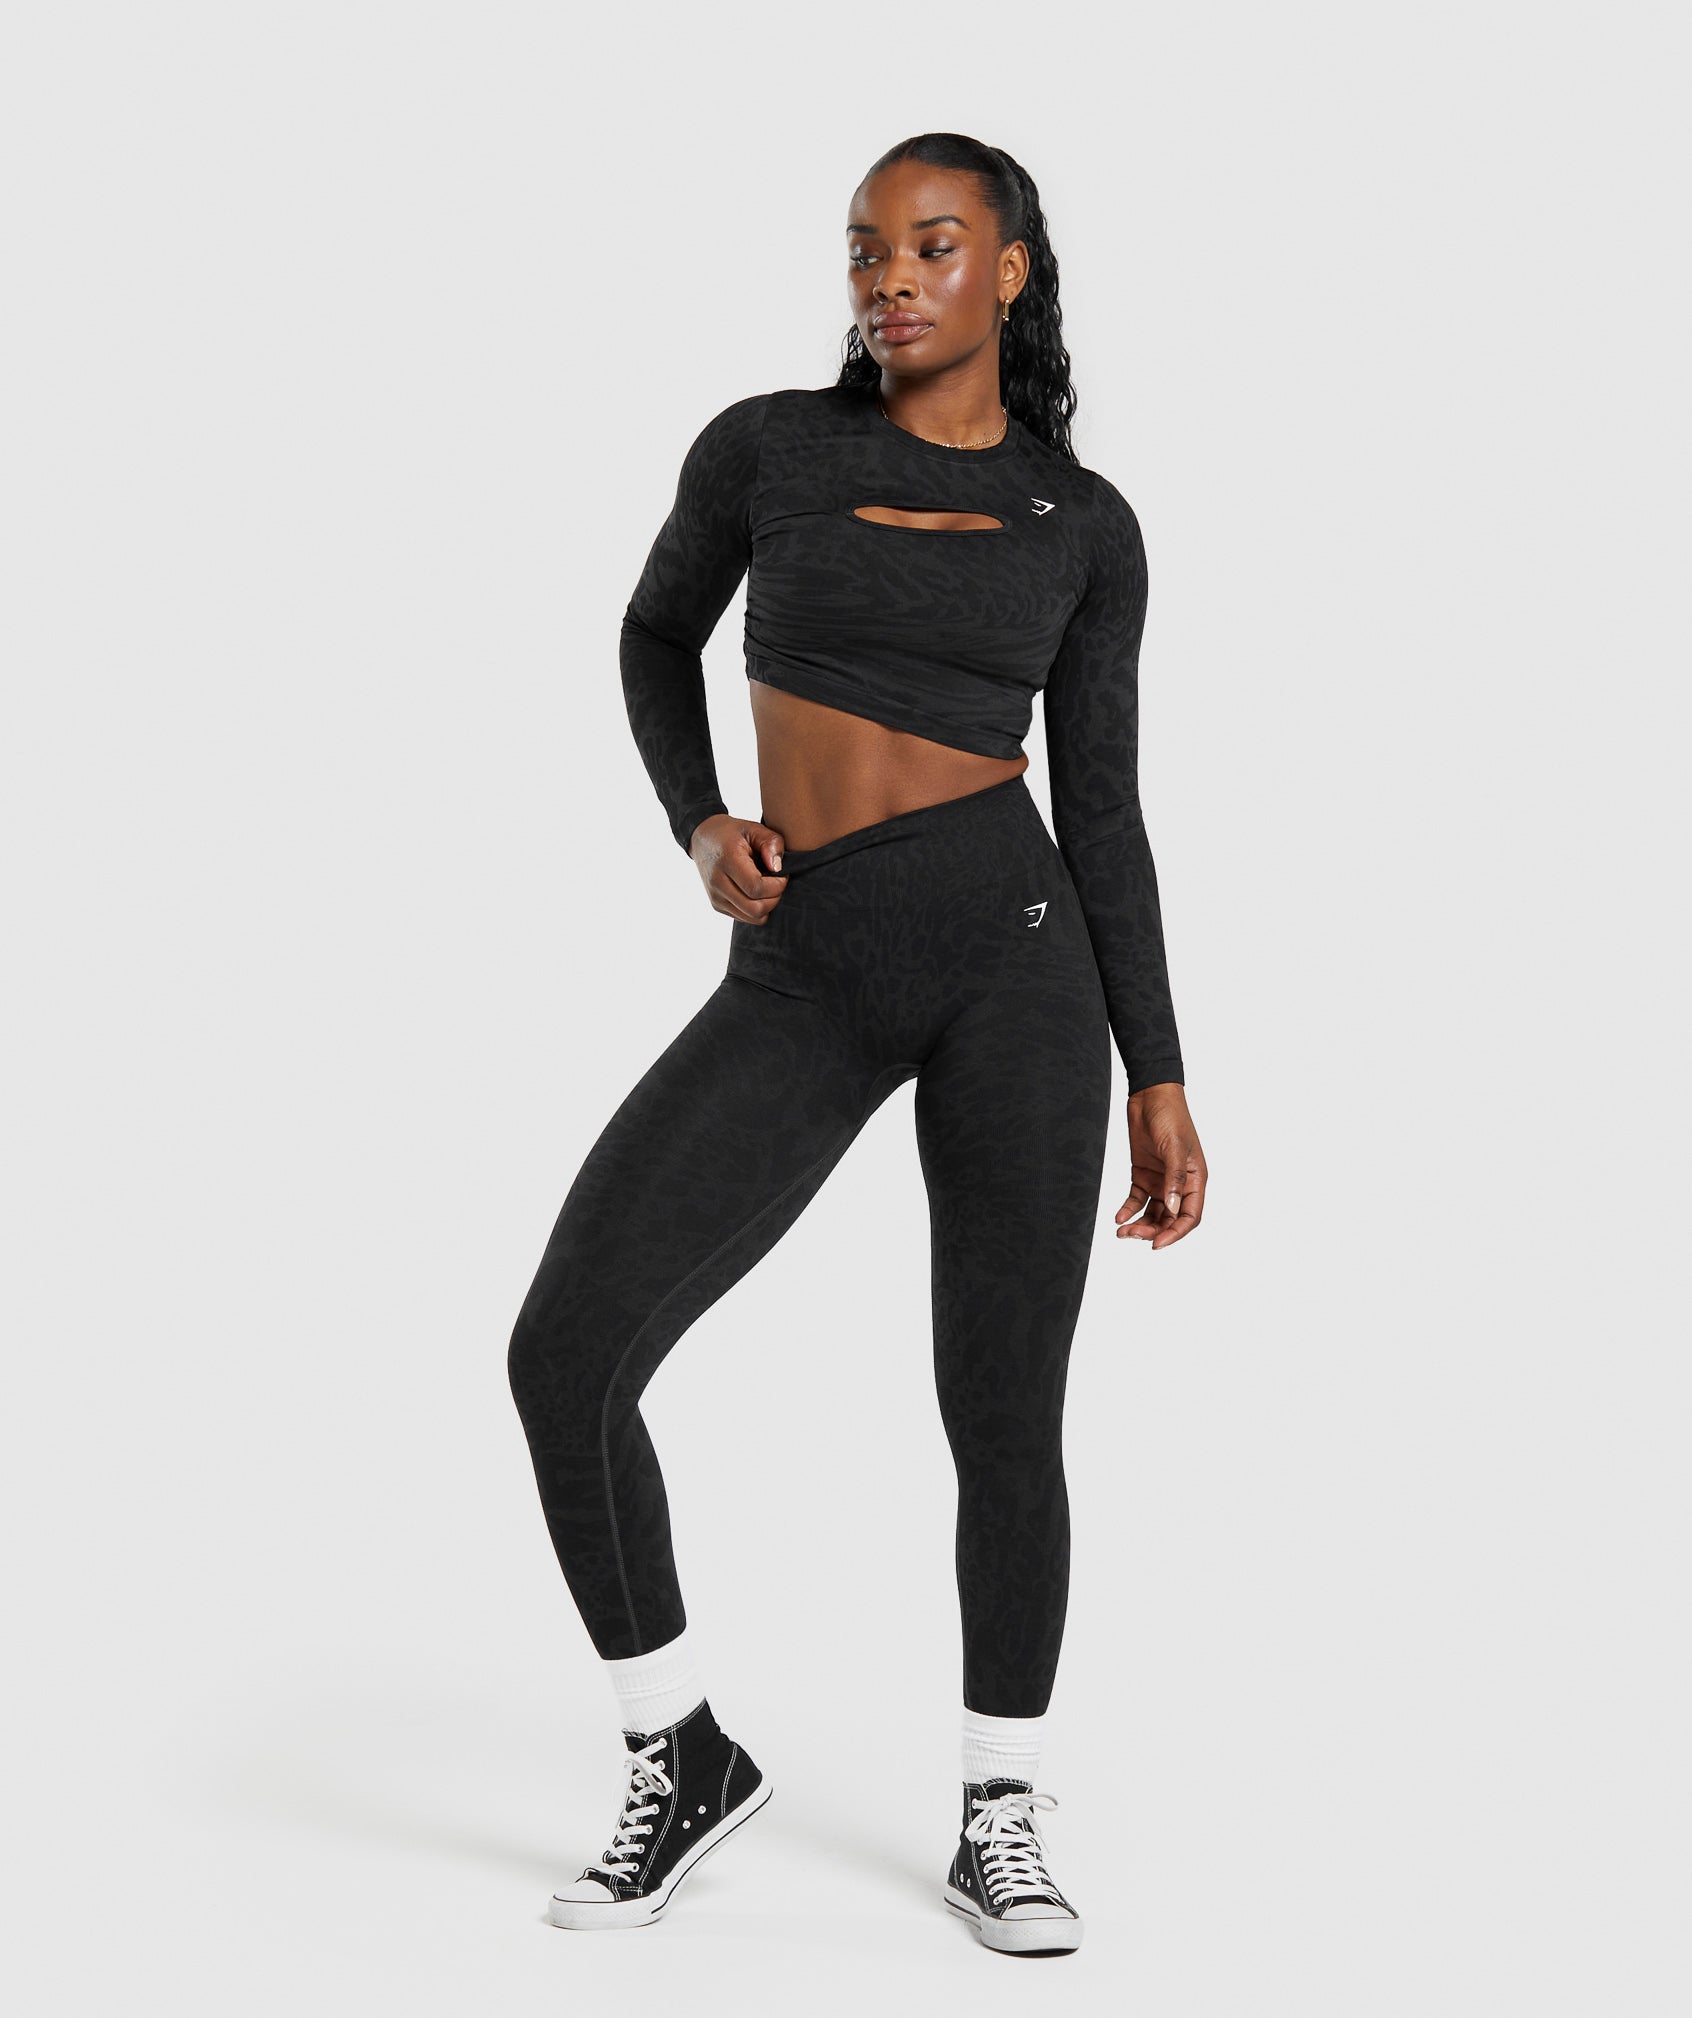 Gymshark ADAPT MARL SEAMLESS LEGGINGS - BLACK Size Small